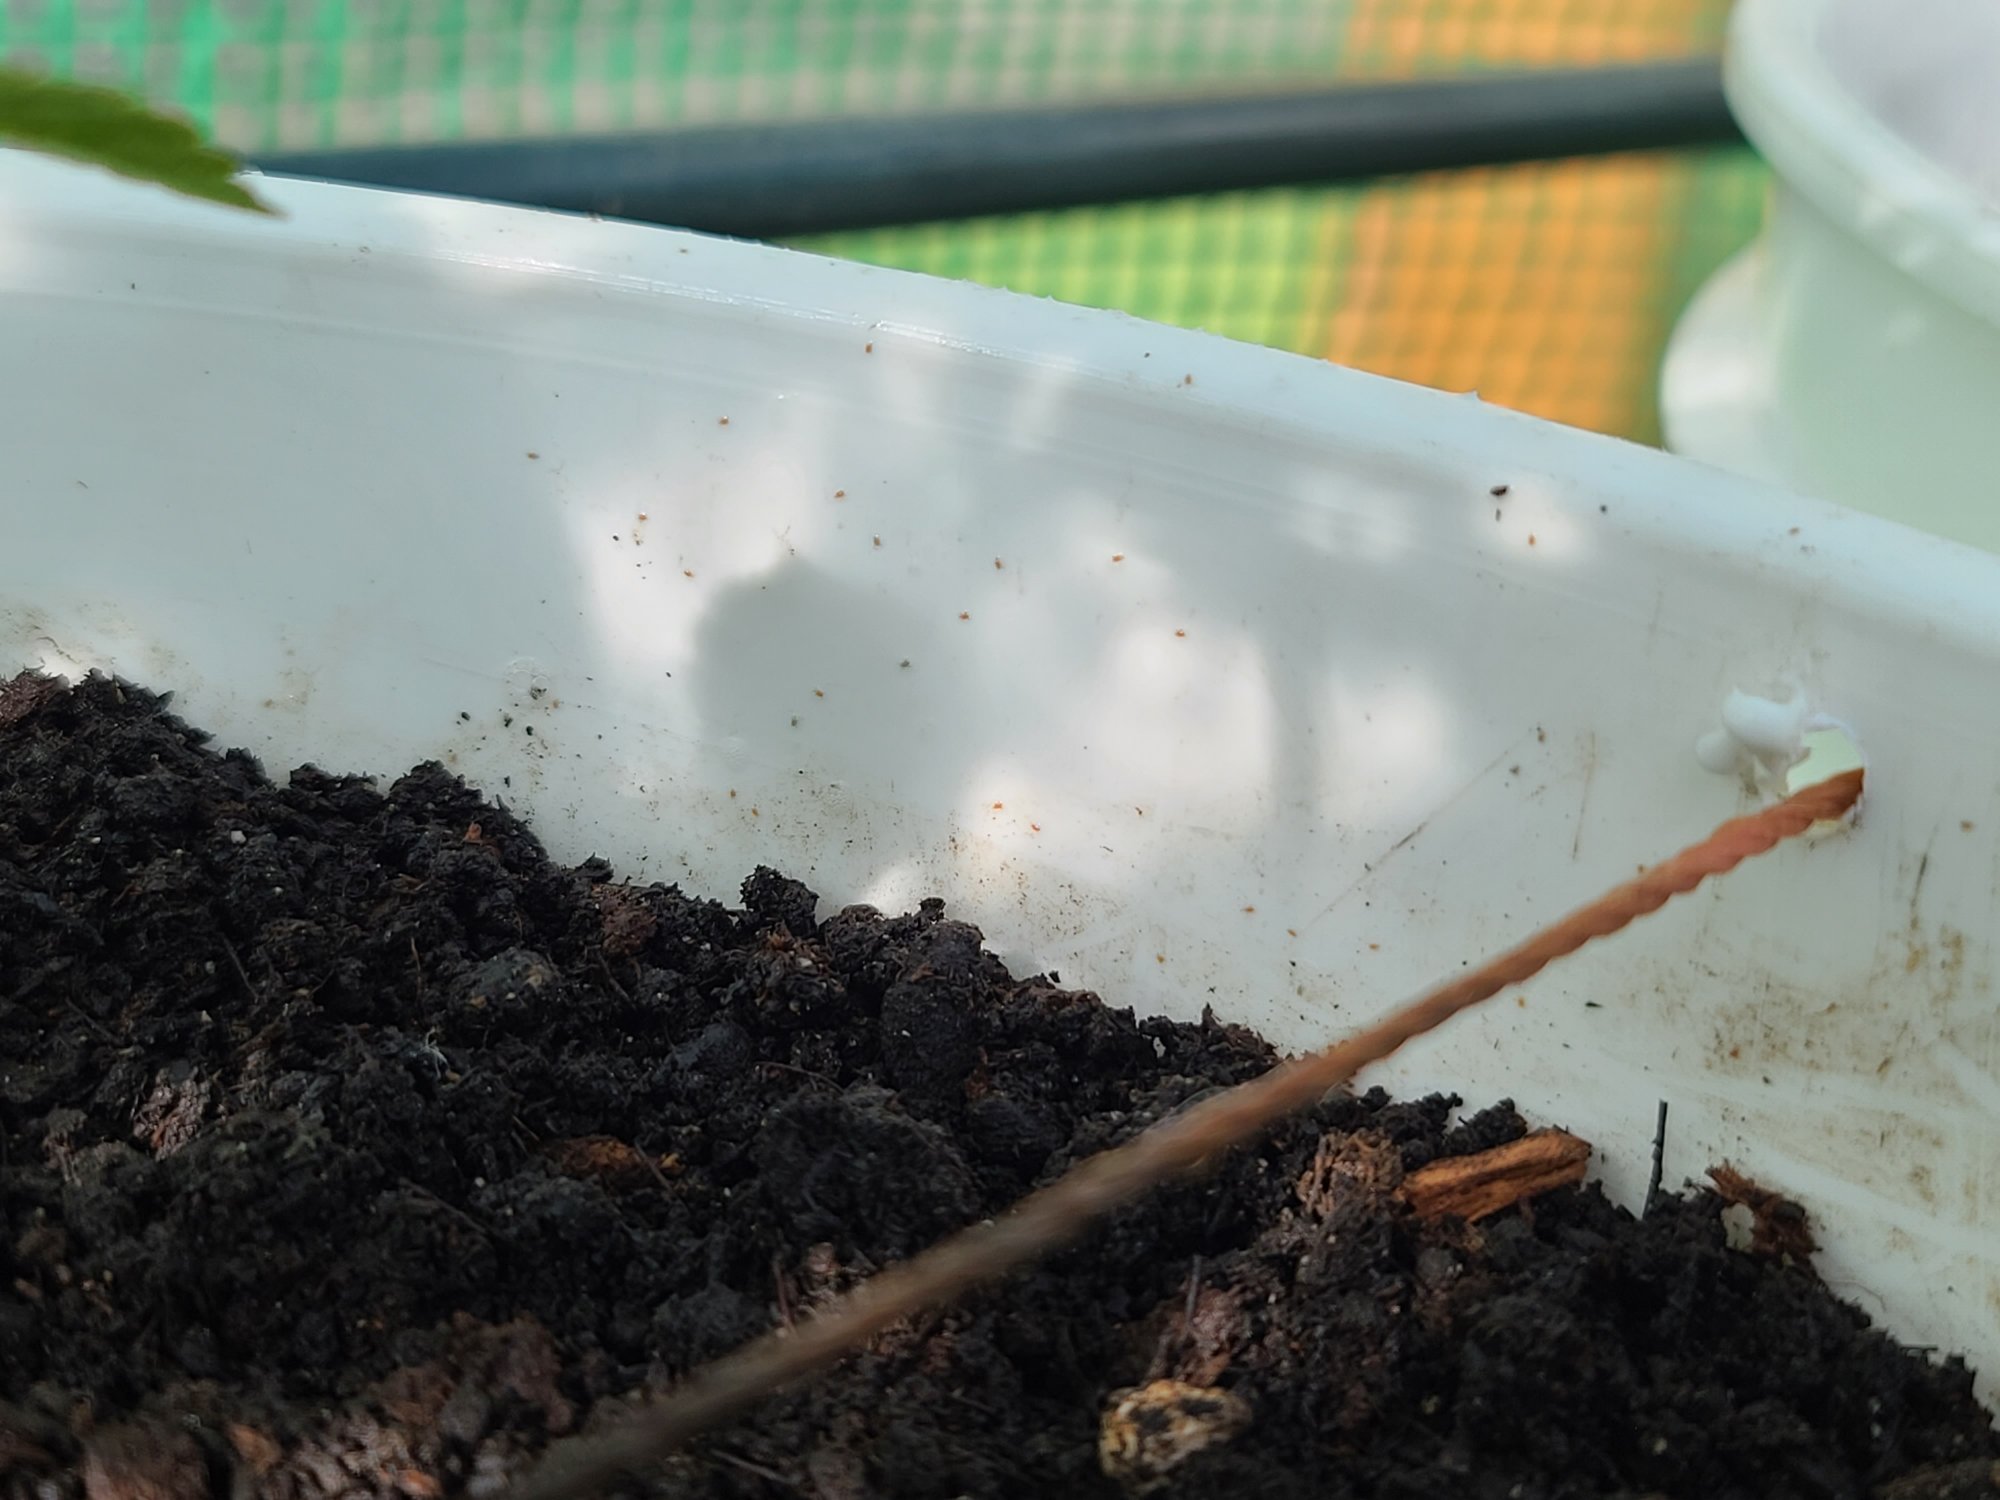 Spider mitessoil mites in my soil